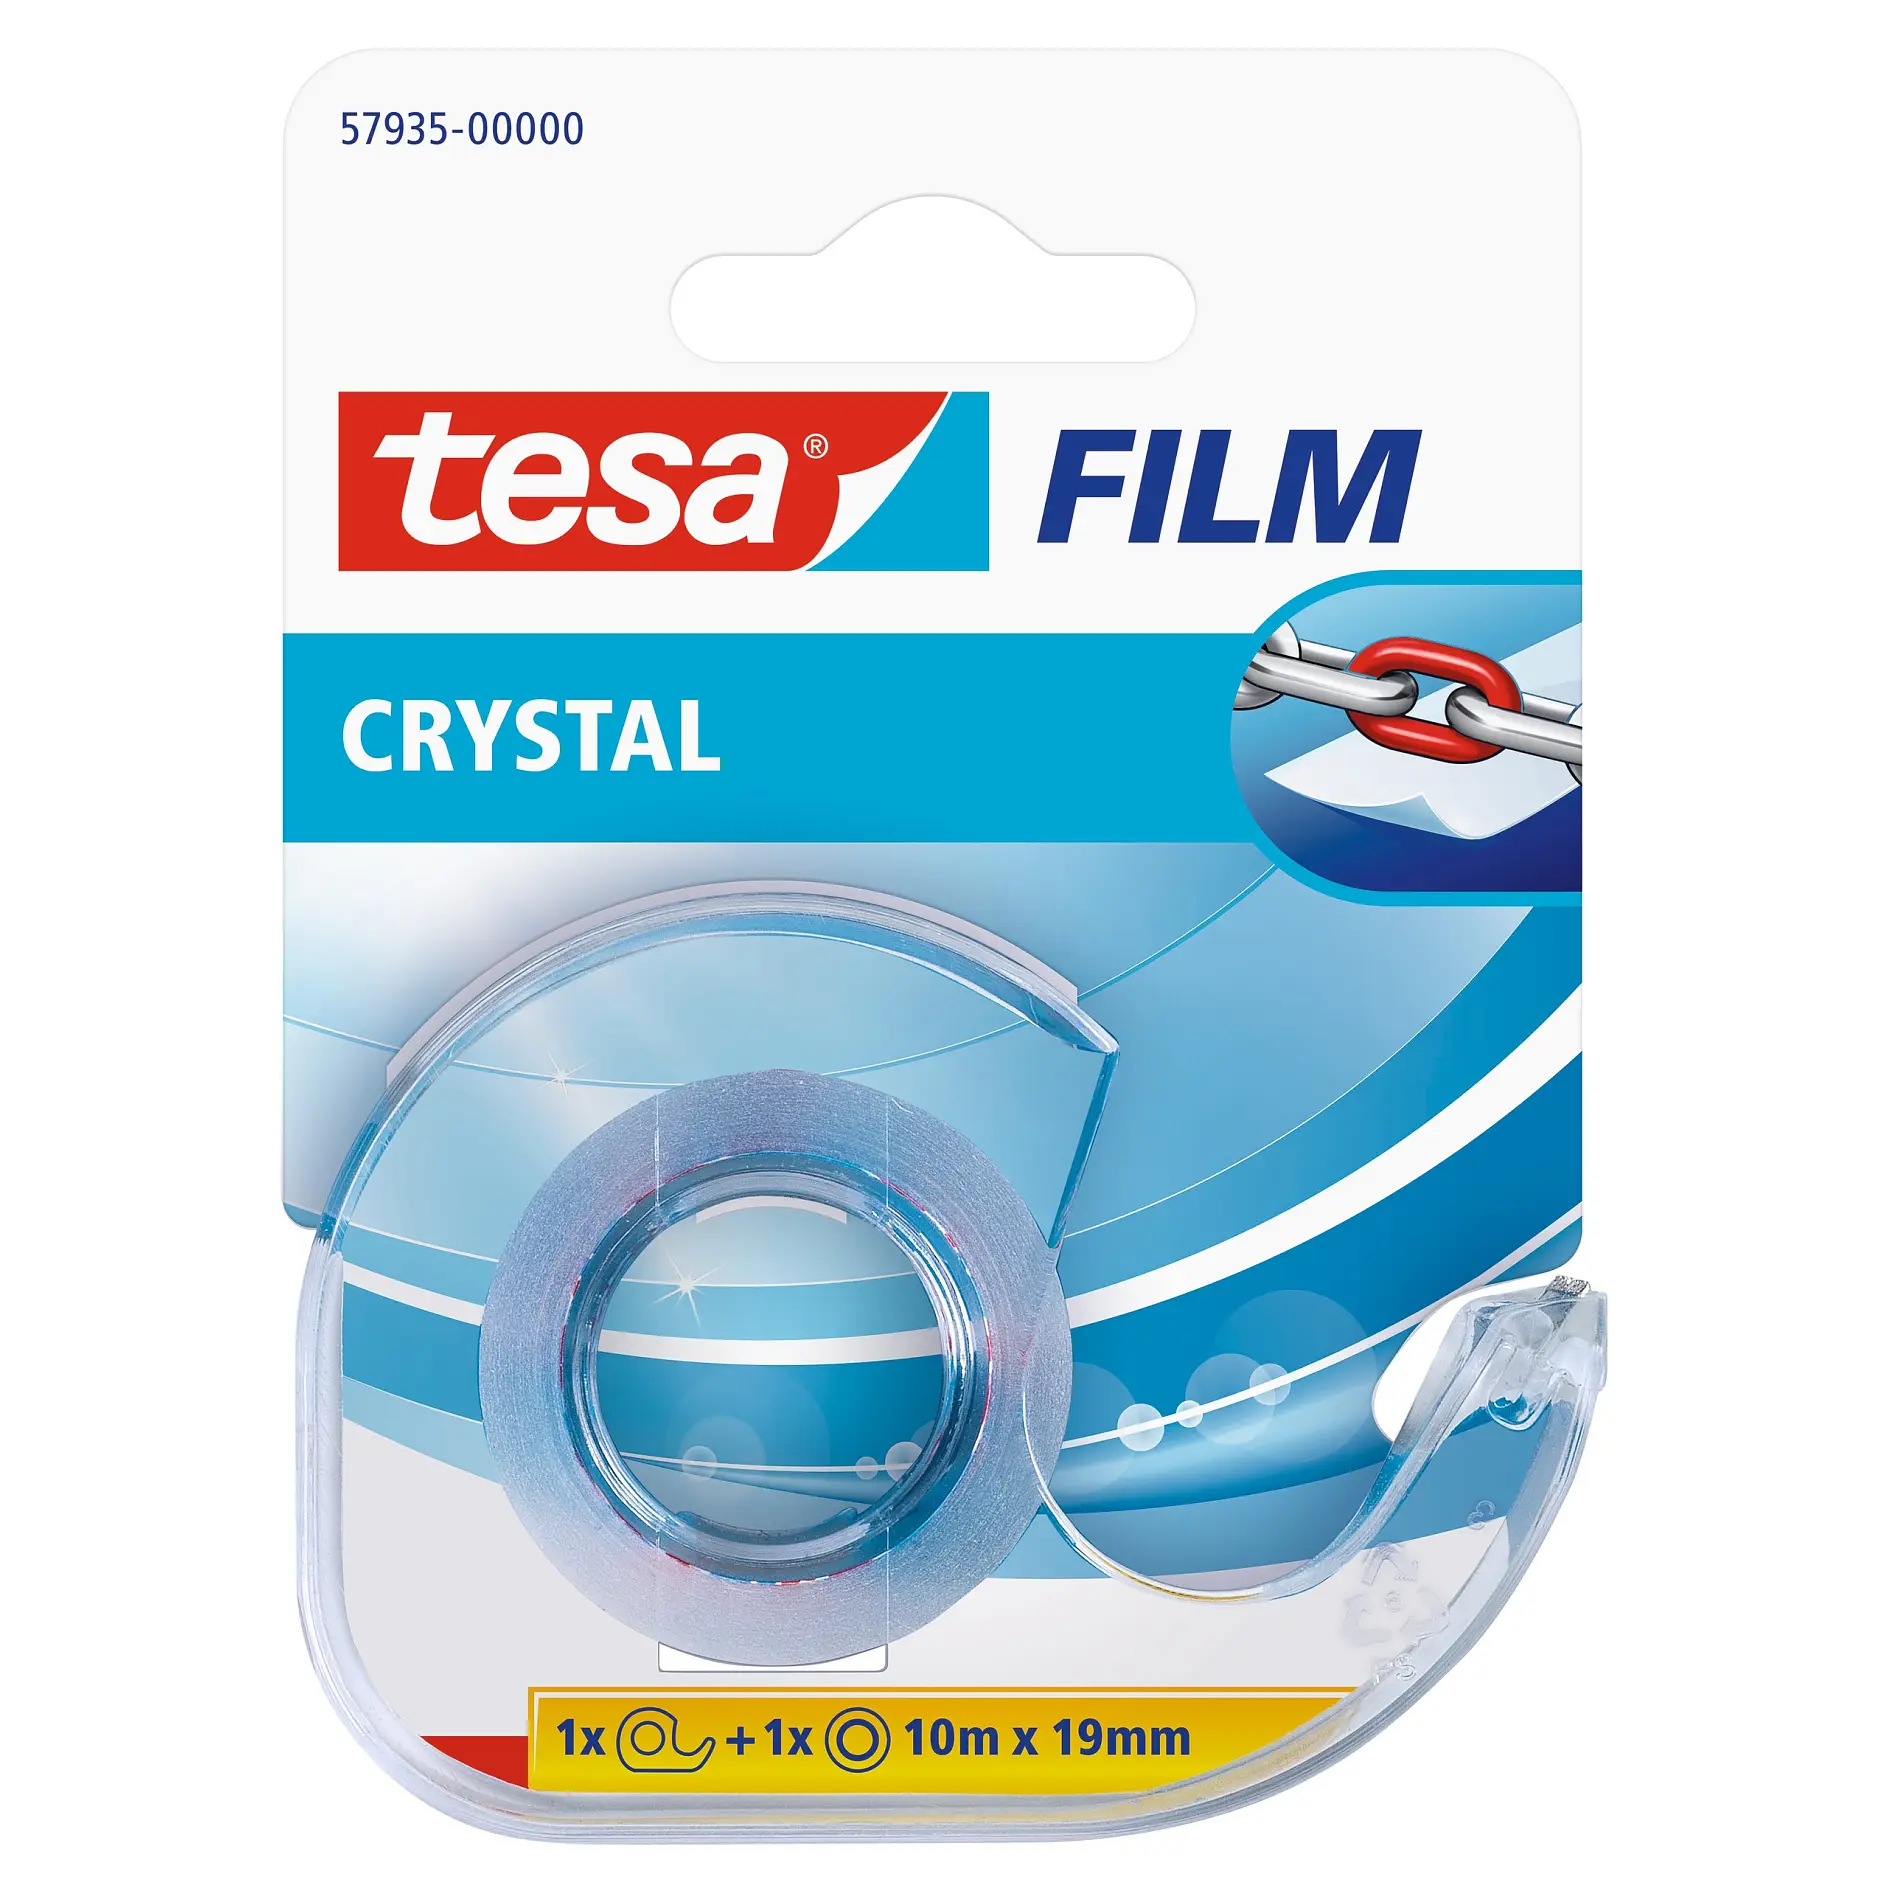 [en-en] 1 x tesafilm Crystal 10m x 19mm + Disposable Dispenser, Hanging Card